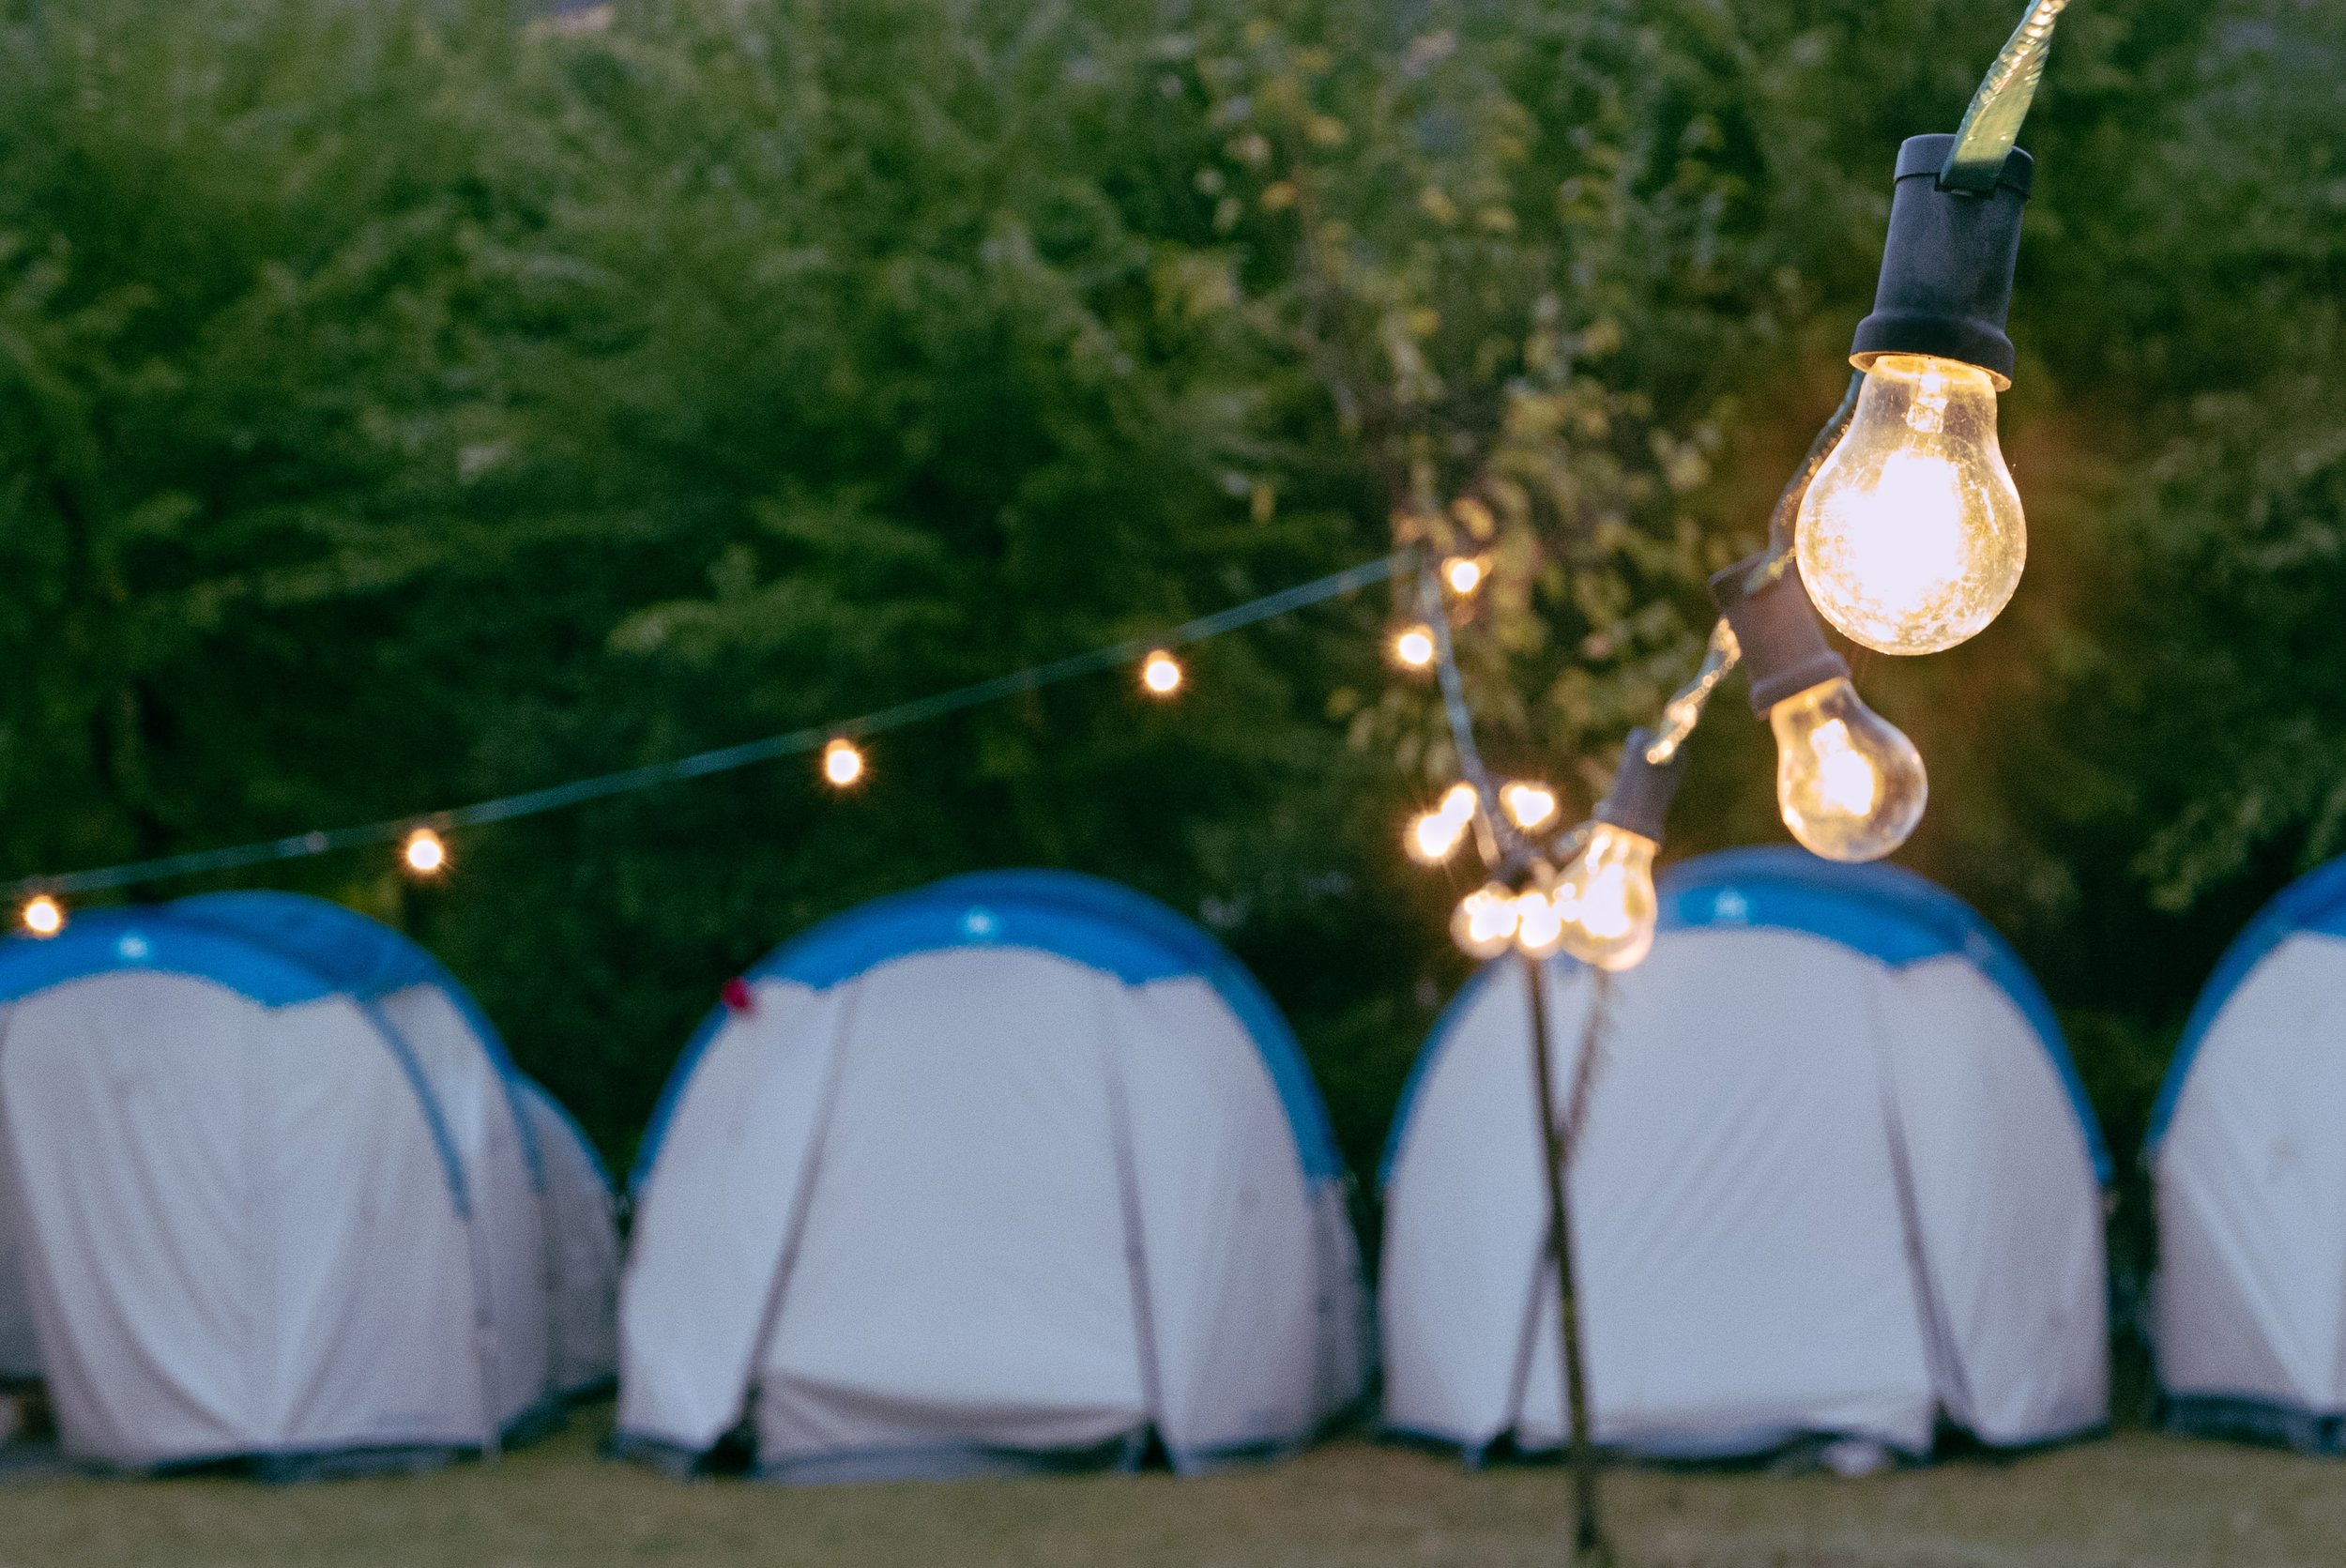 Camping light. Tent Camping Lights. Гирлянда для кемпинга. Лампа для кемпинга на огне. Свет для кемпинга.